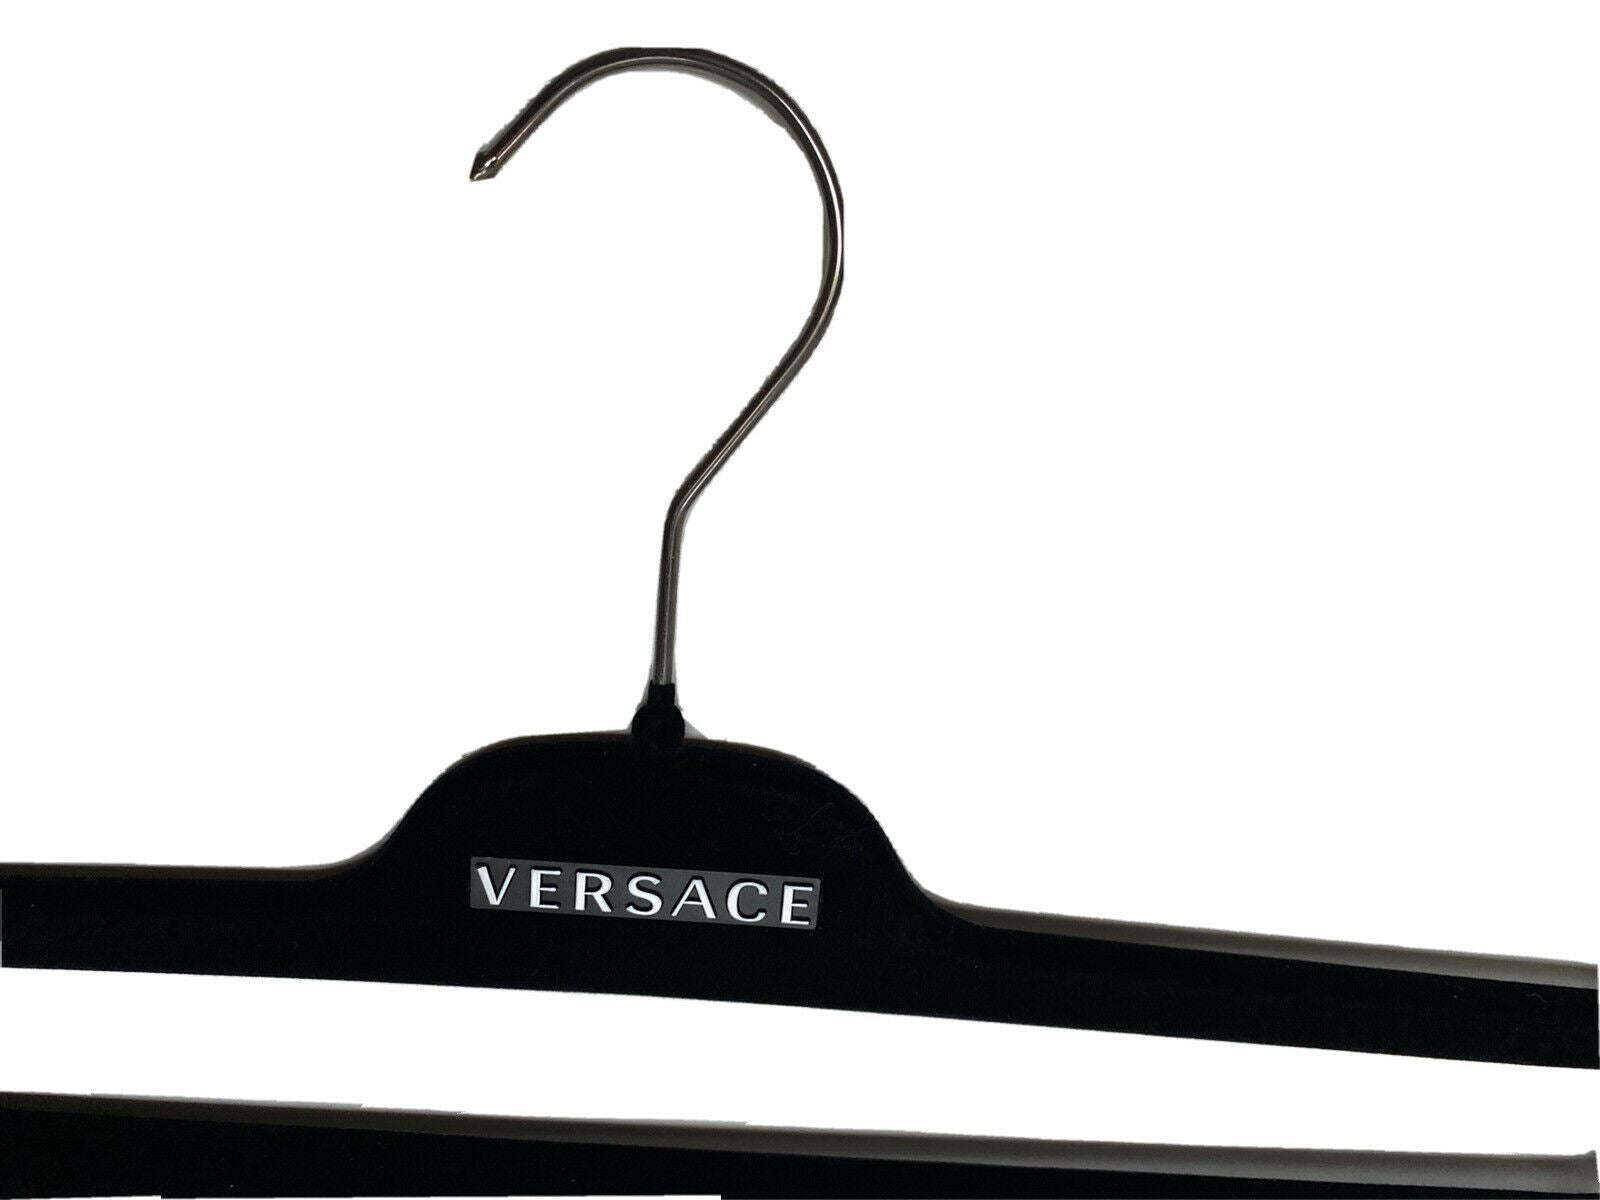 VERSACE Black Velvet 15" Pants Hangers with Silver Hardware